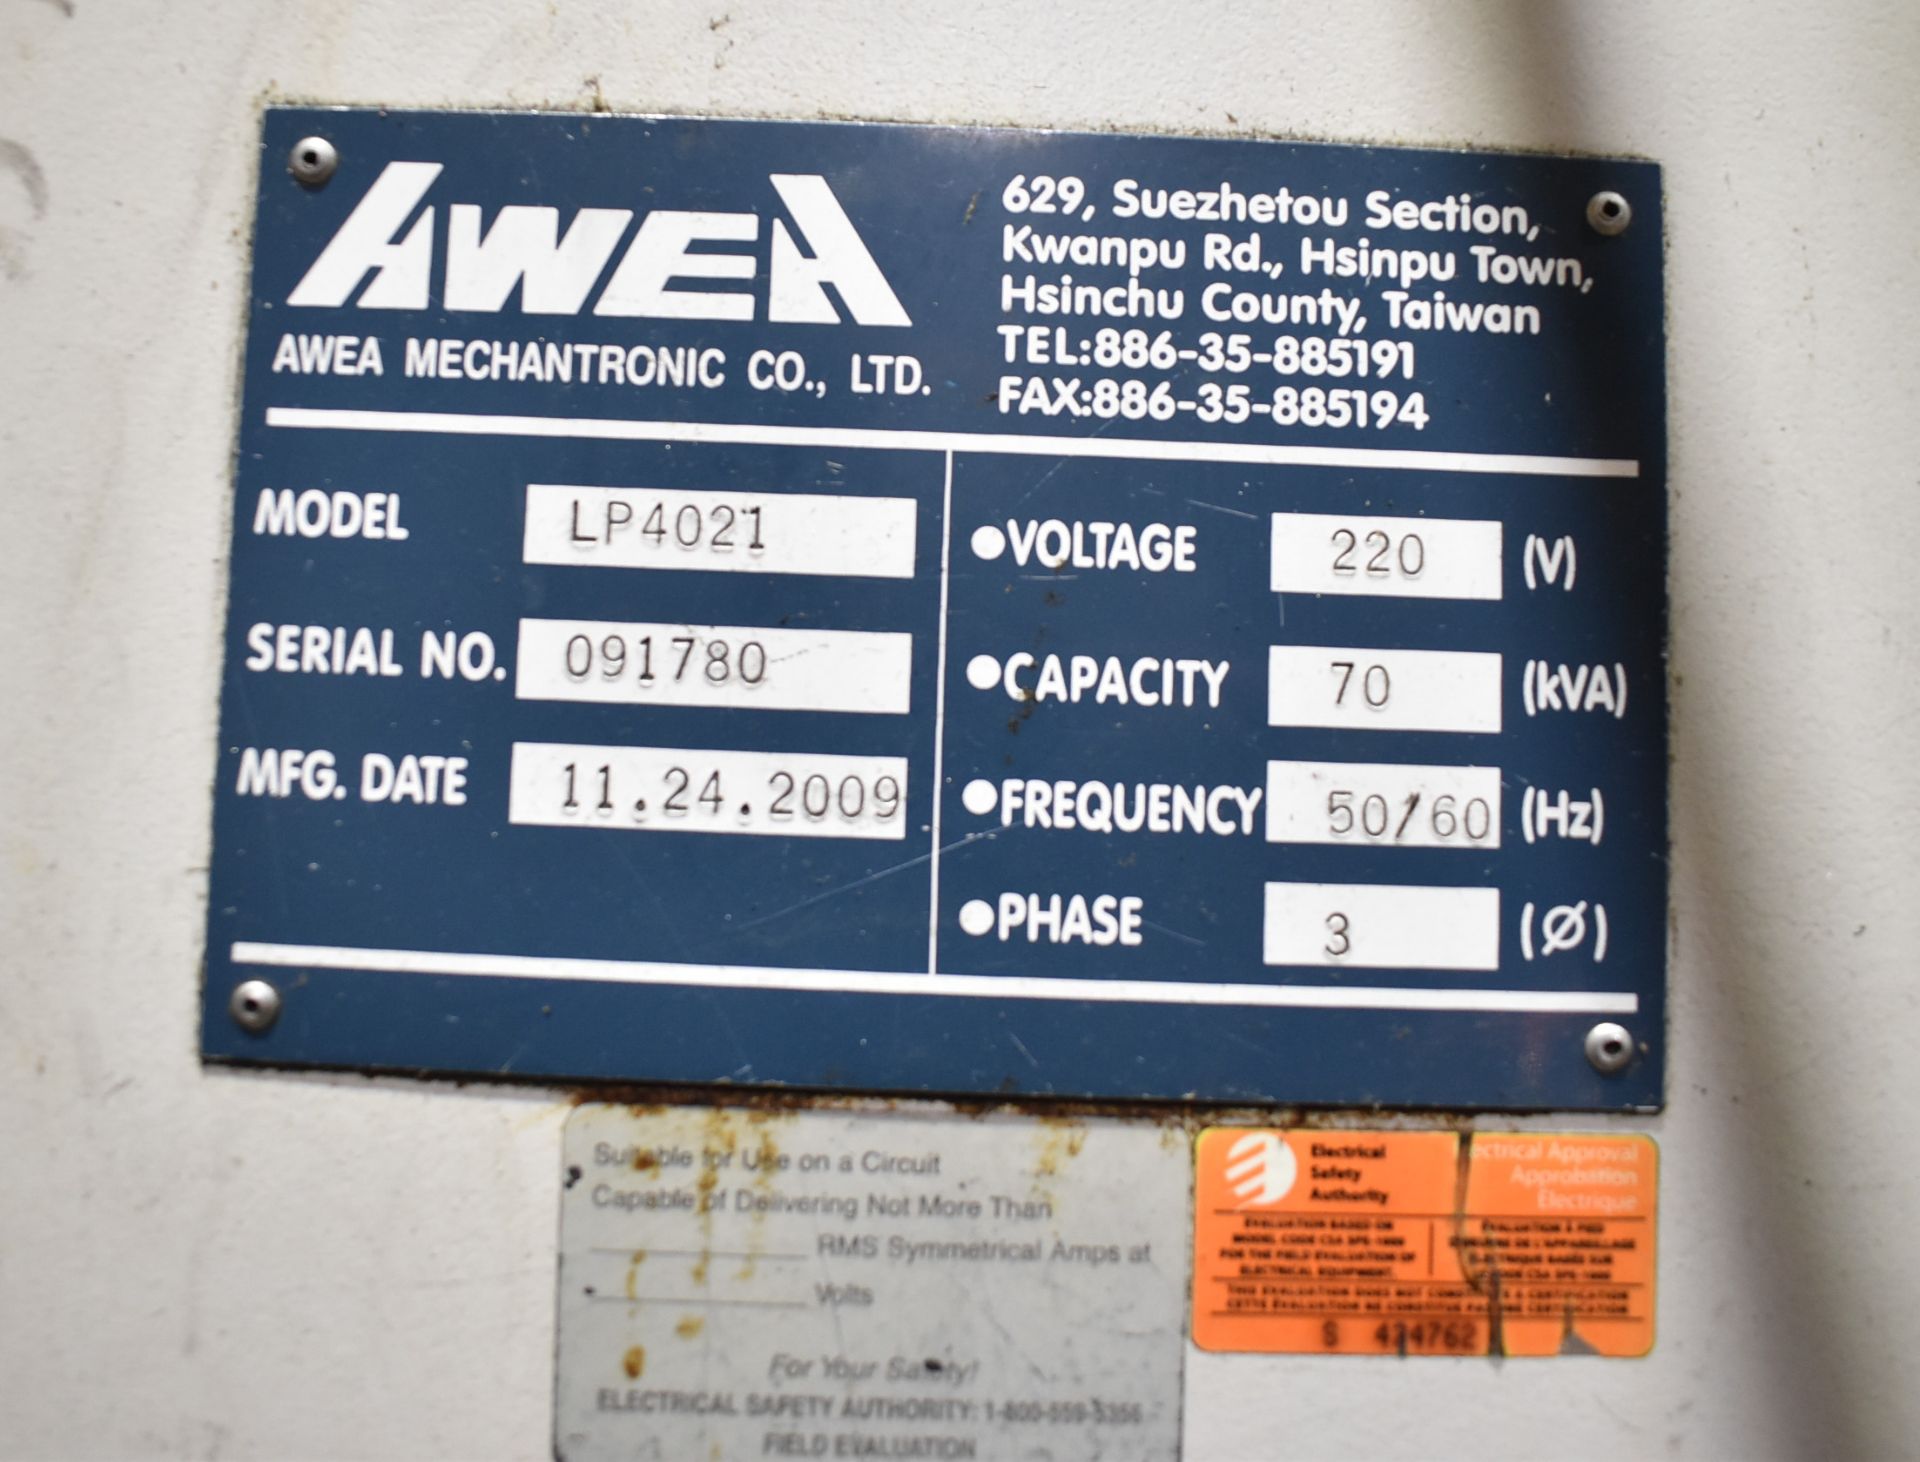 AWEA (2009) LP4021 CNC BRIDGE-TYPE VERTICAL MACHINING CENTER WITH FANUC SERIES 18I-MB CNC CONTROL, - Image 5 of 16